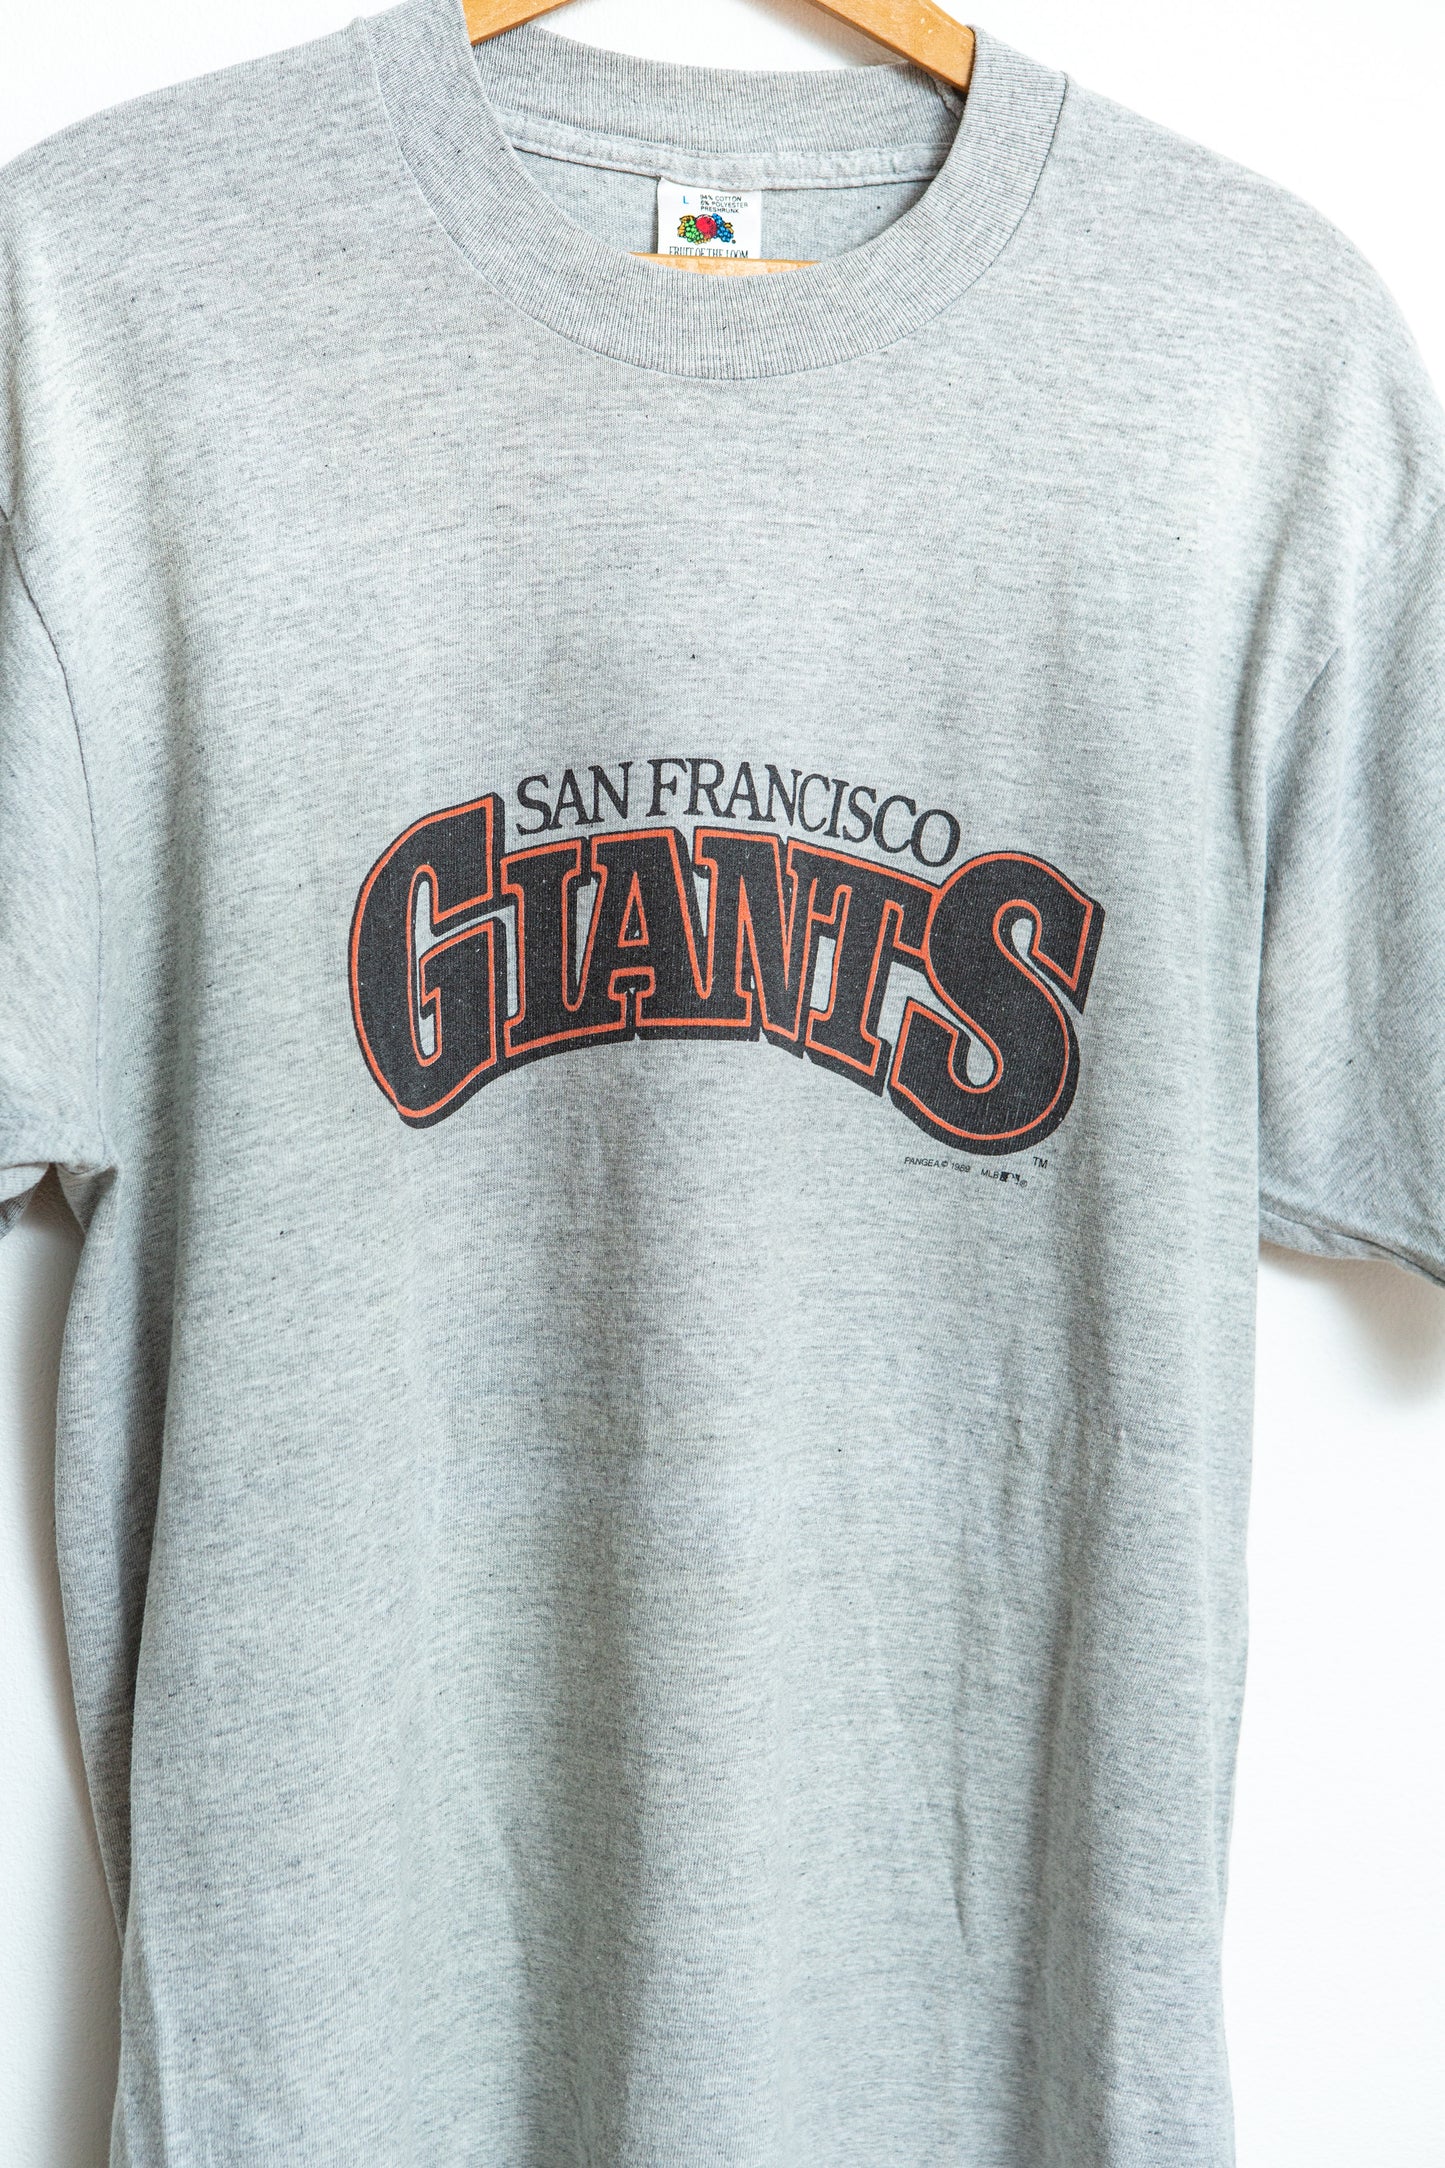 Vintage 1989 SF Giants T-shirt Size L